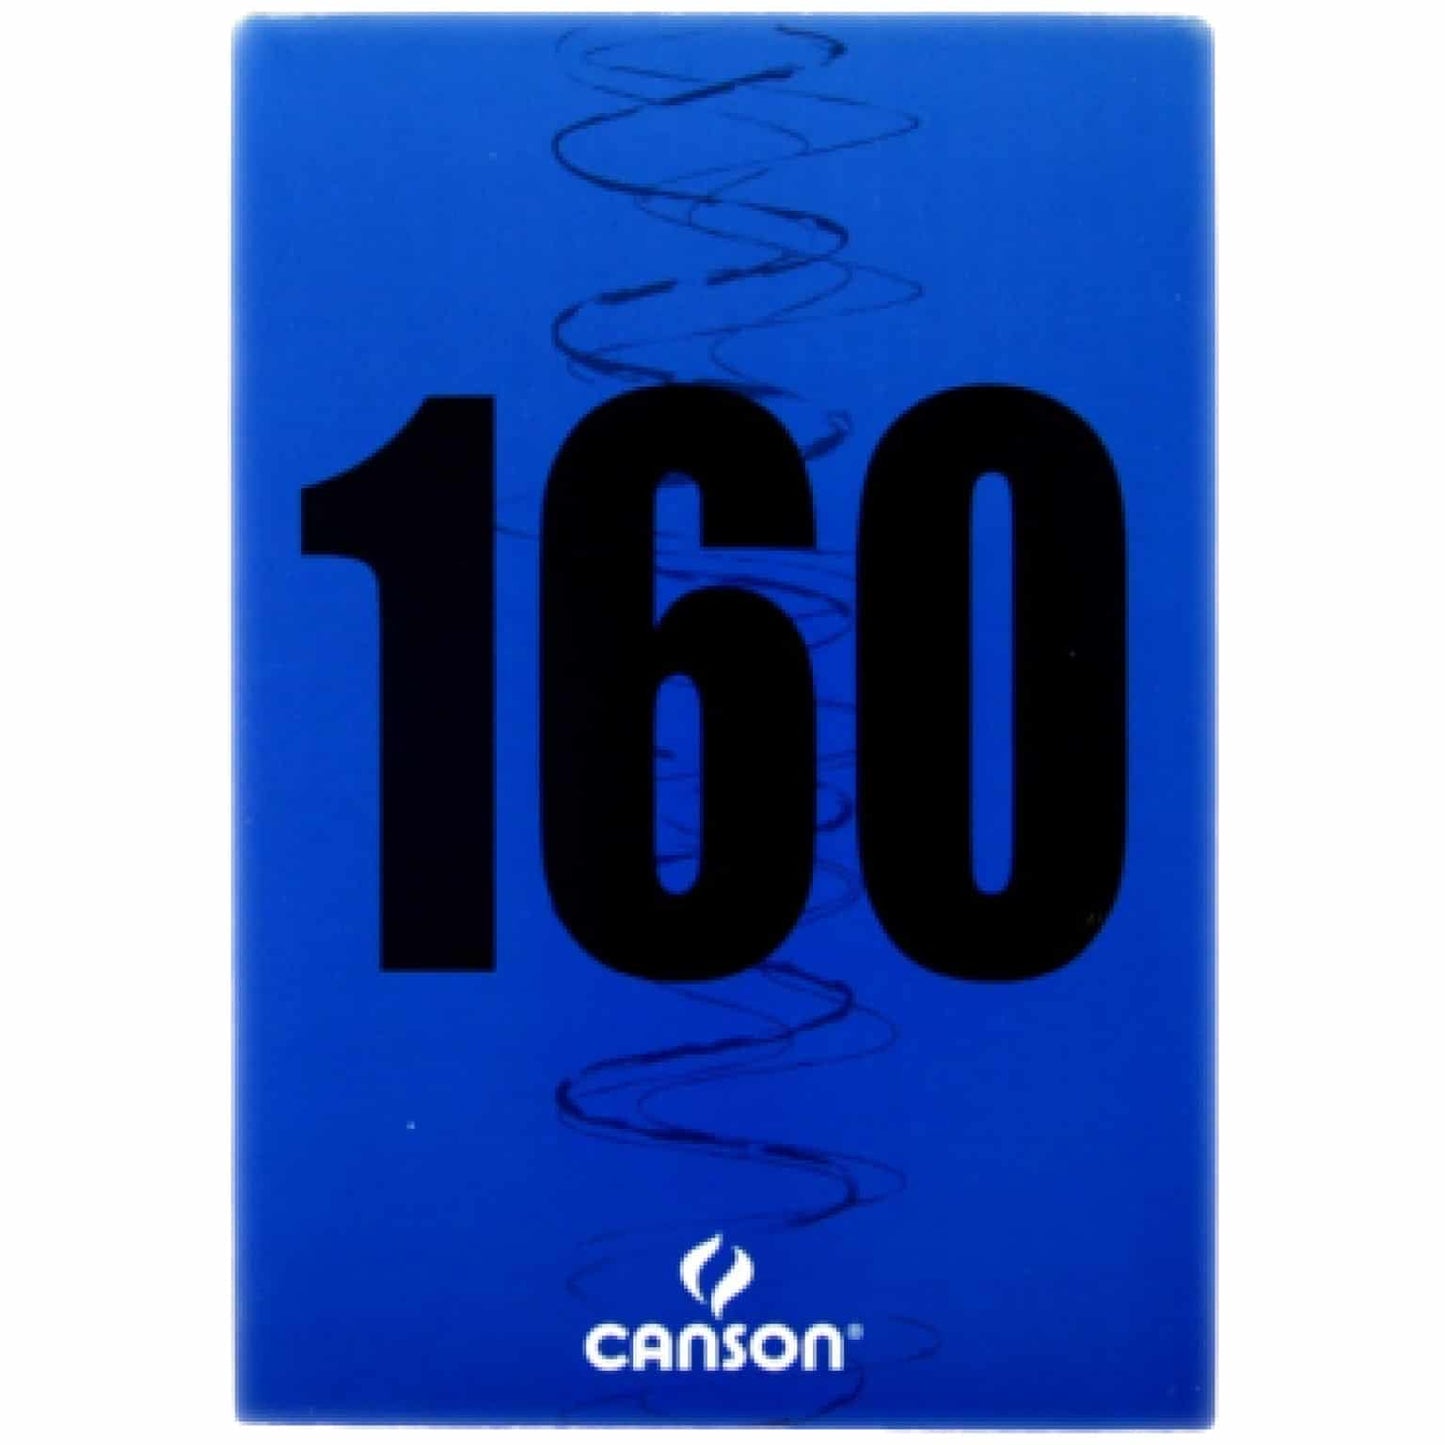 Canson Sketch Pad 160gsm A5 Size || كراسة رسم كانسون ١٦٠ جرام حجم 